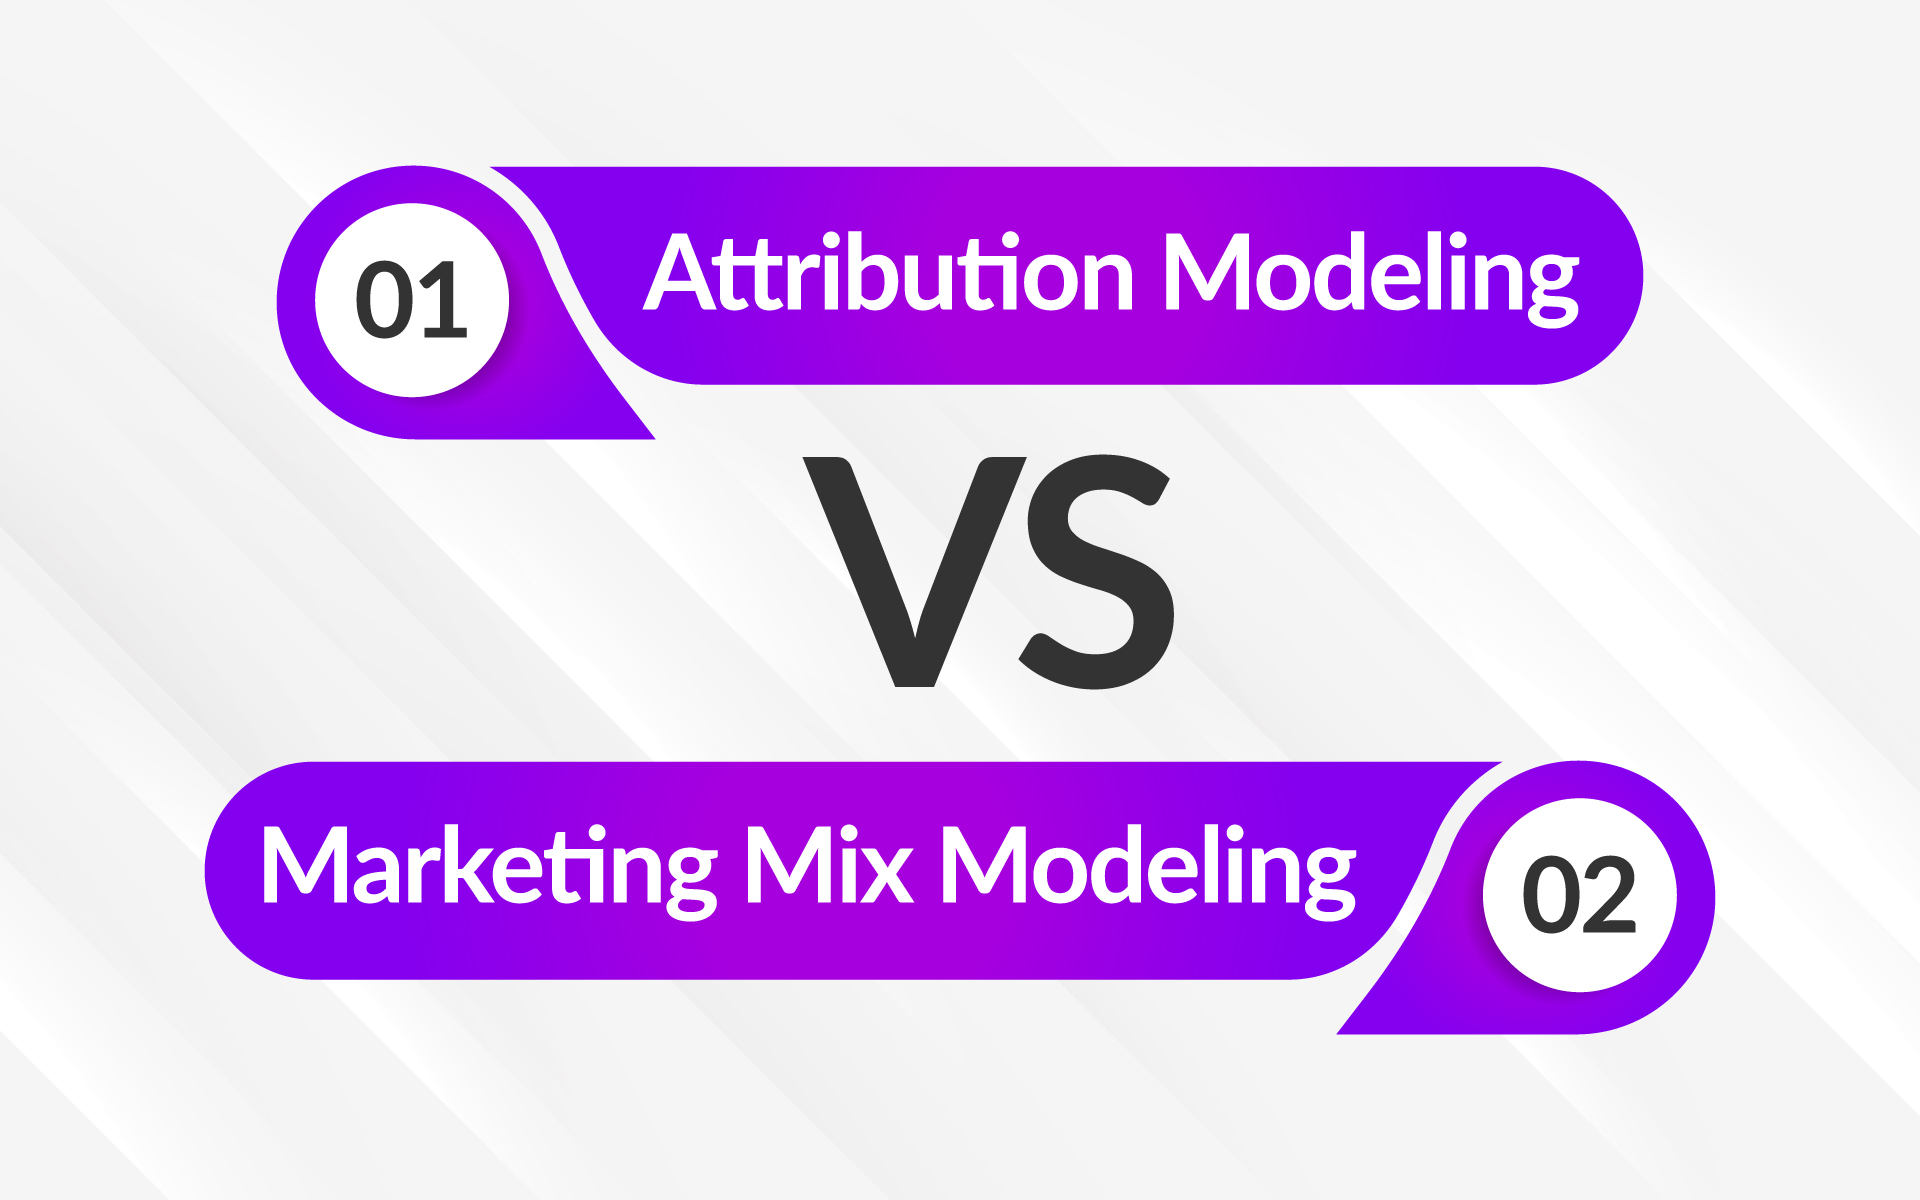 Attribution Modeling vs Marketing Mix Modeling